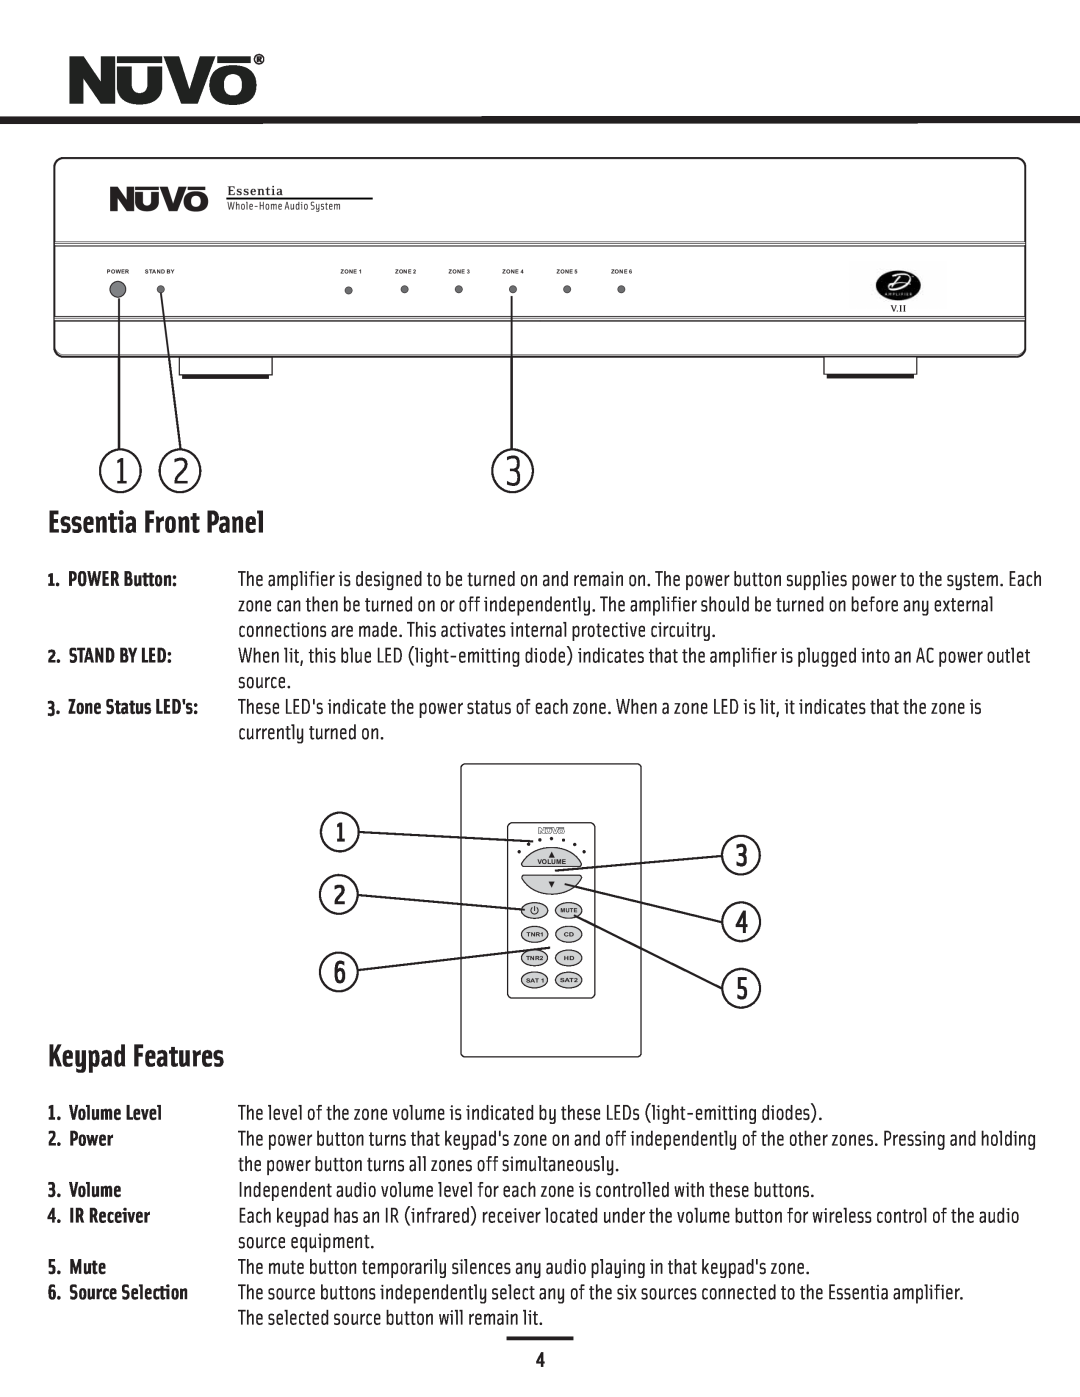 Nuvo NV-E6DXS-DC, NV-E6DMS-DC manual Essentia Front Panel, Keypad Features, Volume Level, Power, IR Receiver, Mute 